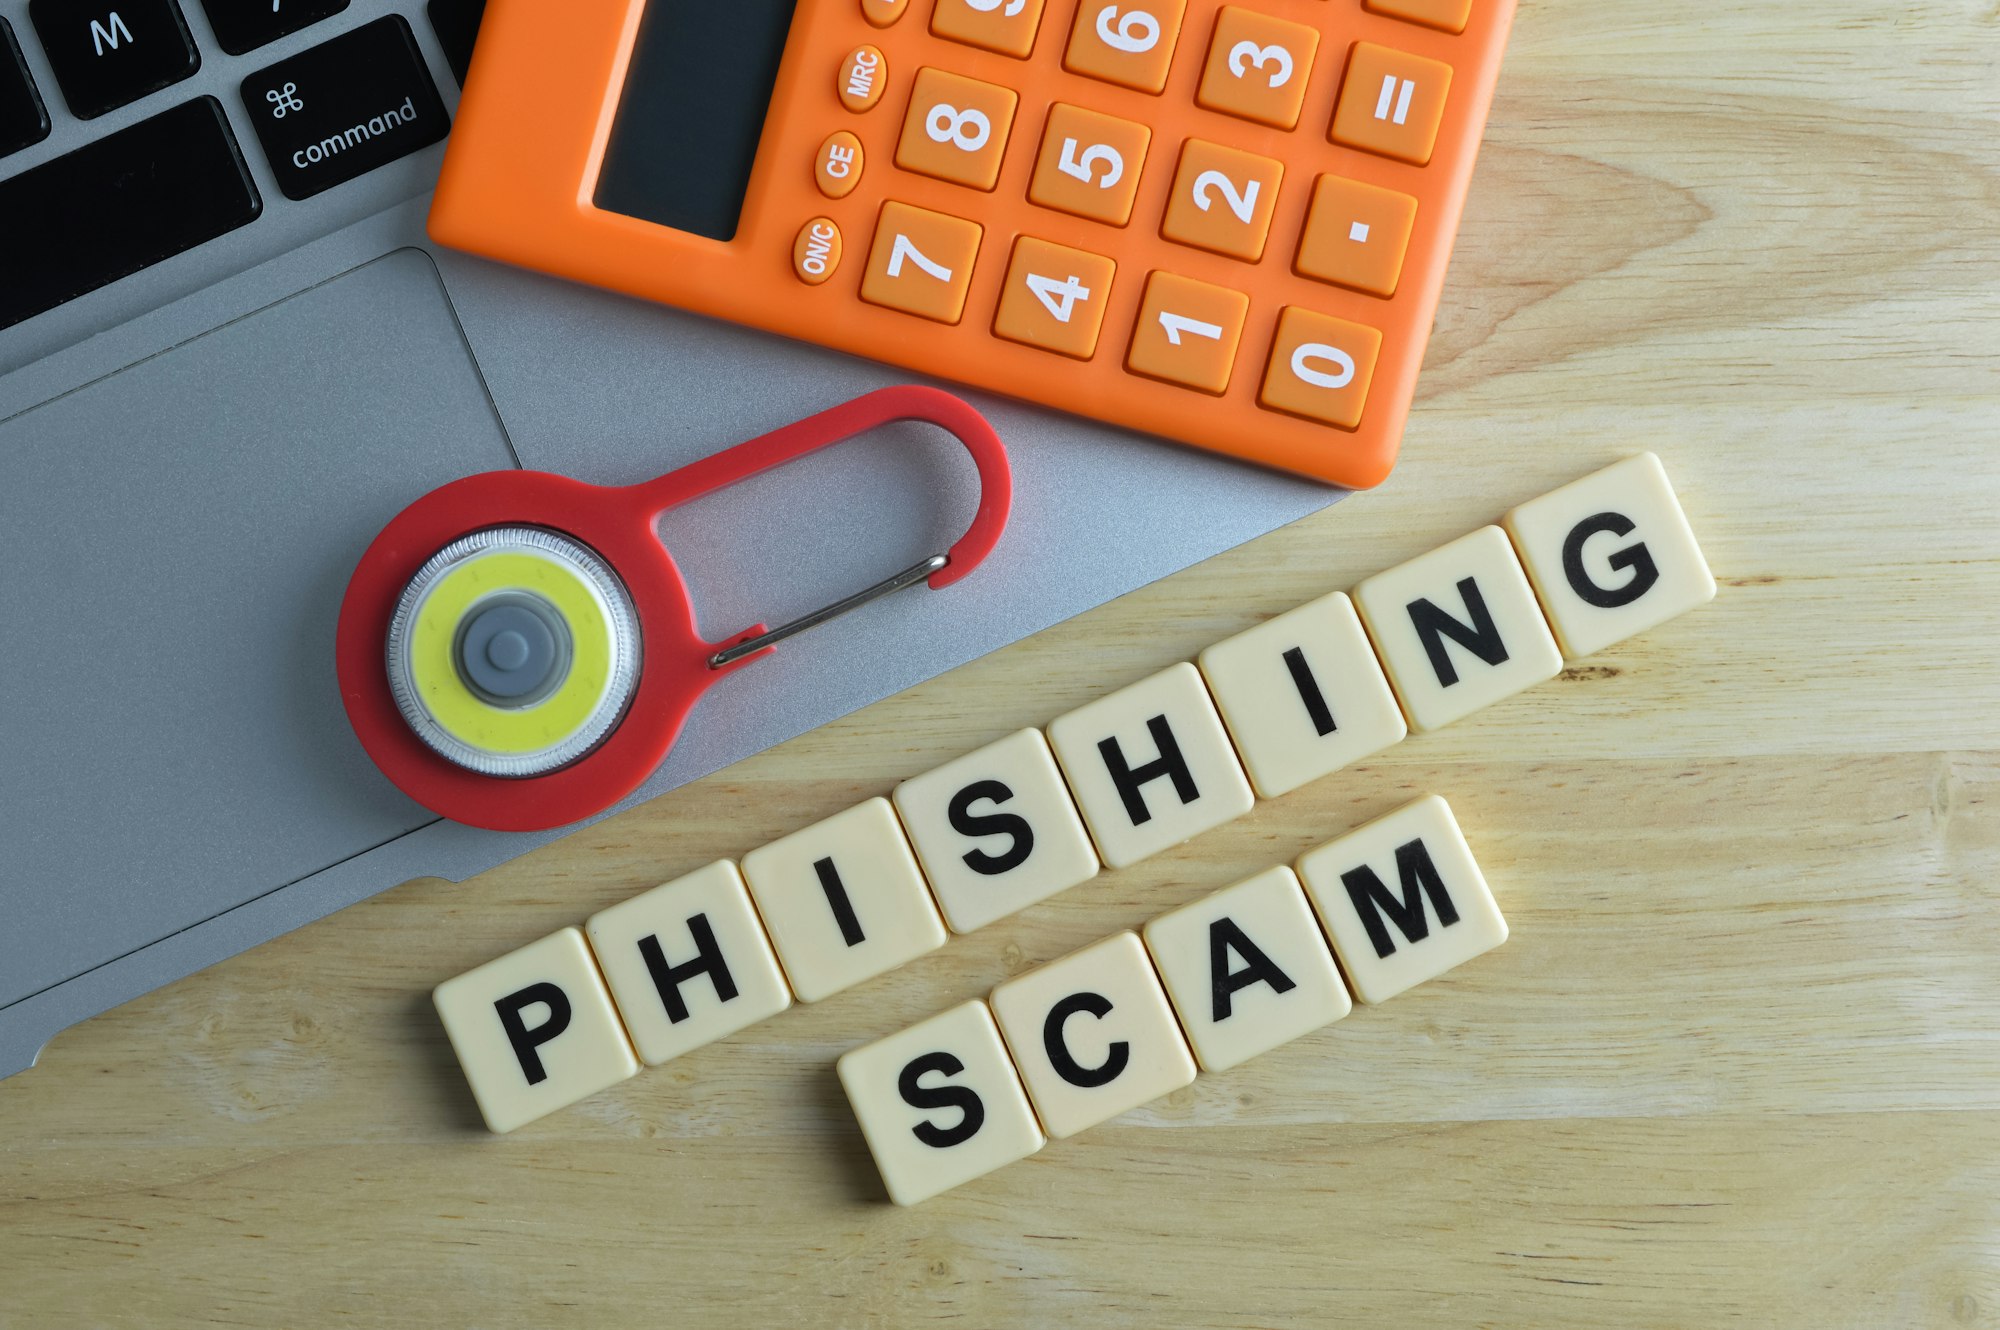 Les attaques de phishing : vigilance face à la sophistication des hackers